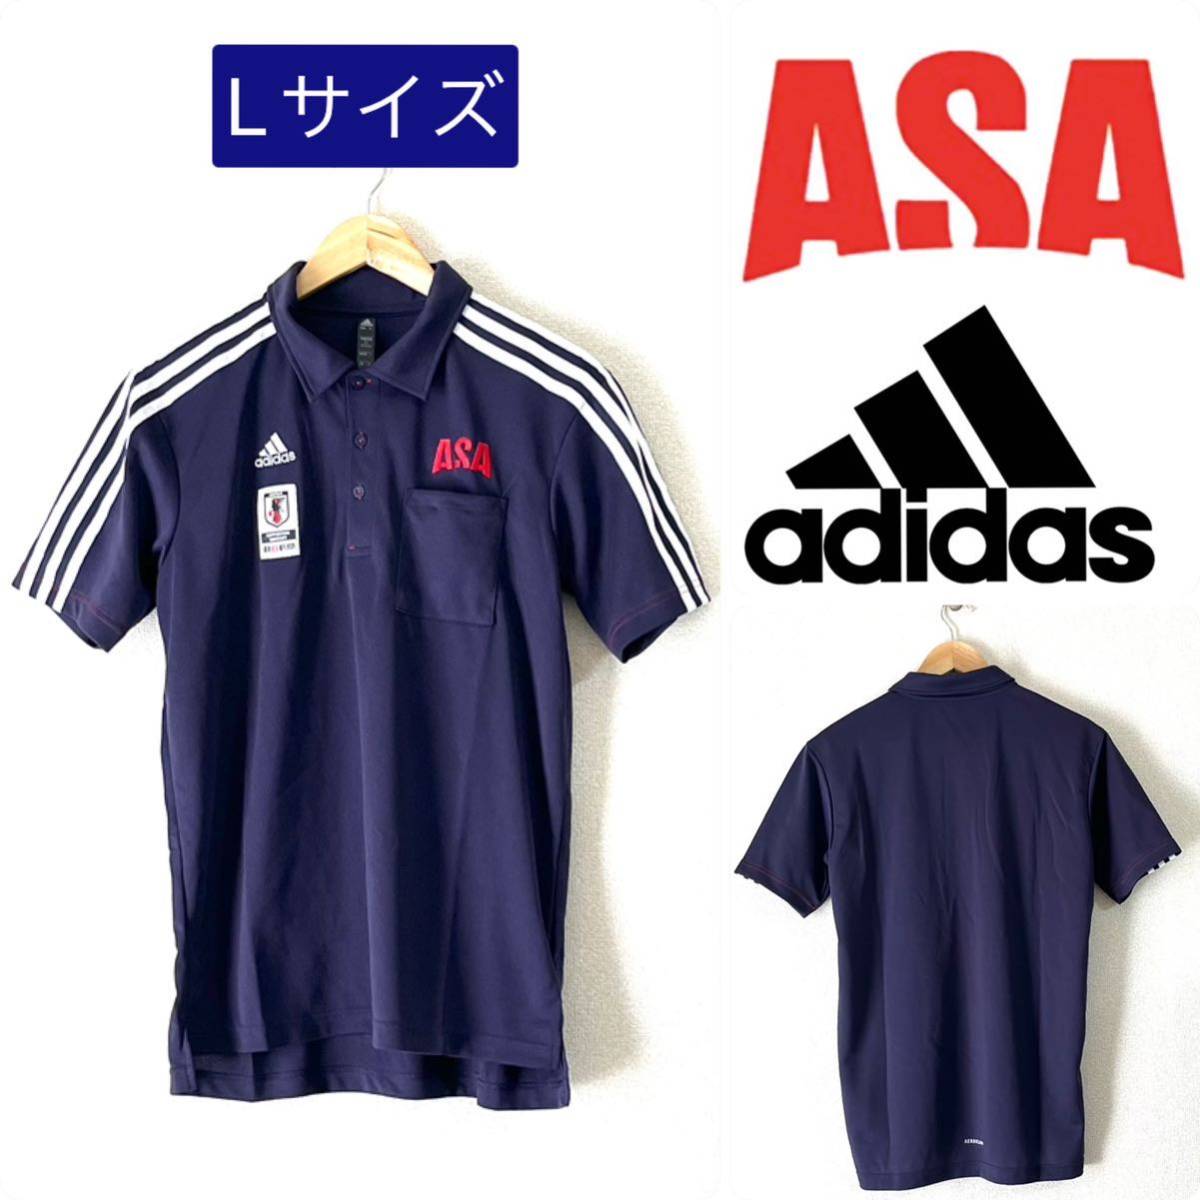 adidas×朝日新聞 サッカーユニフォーム - ウェア